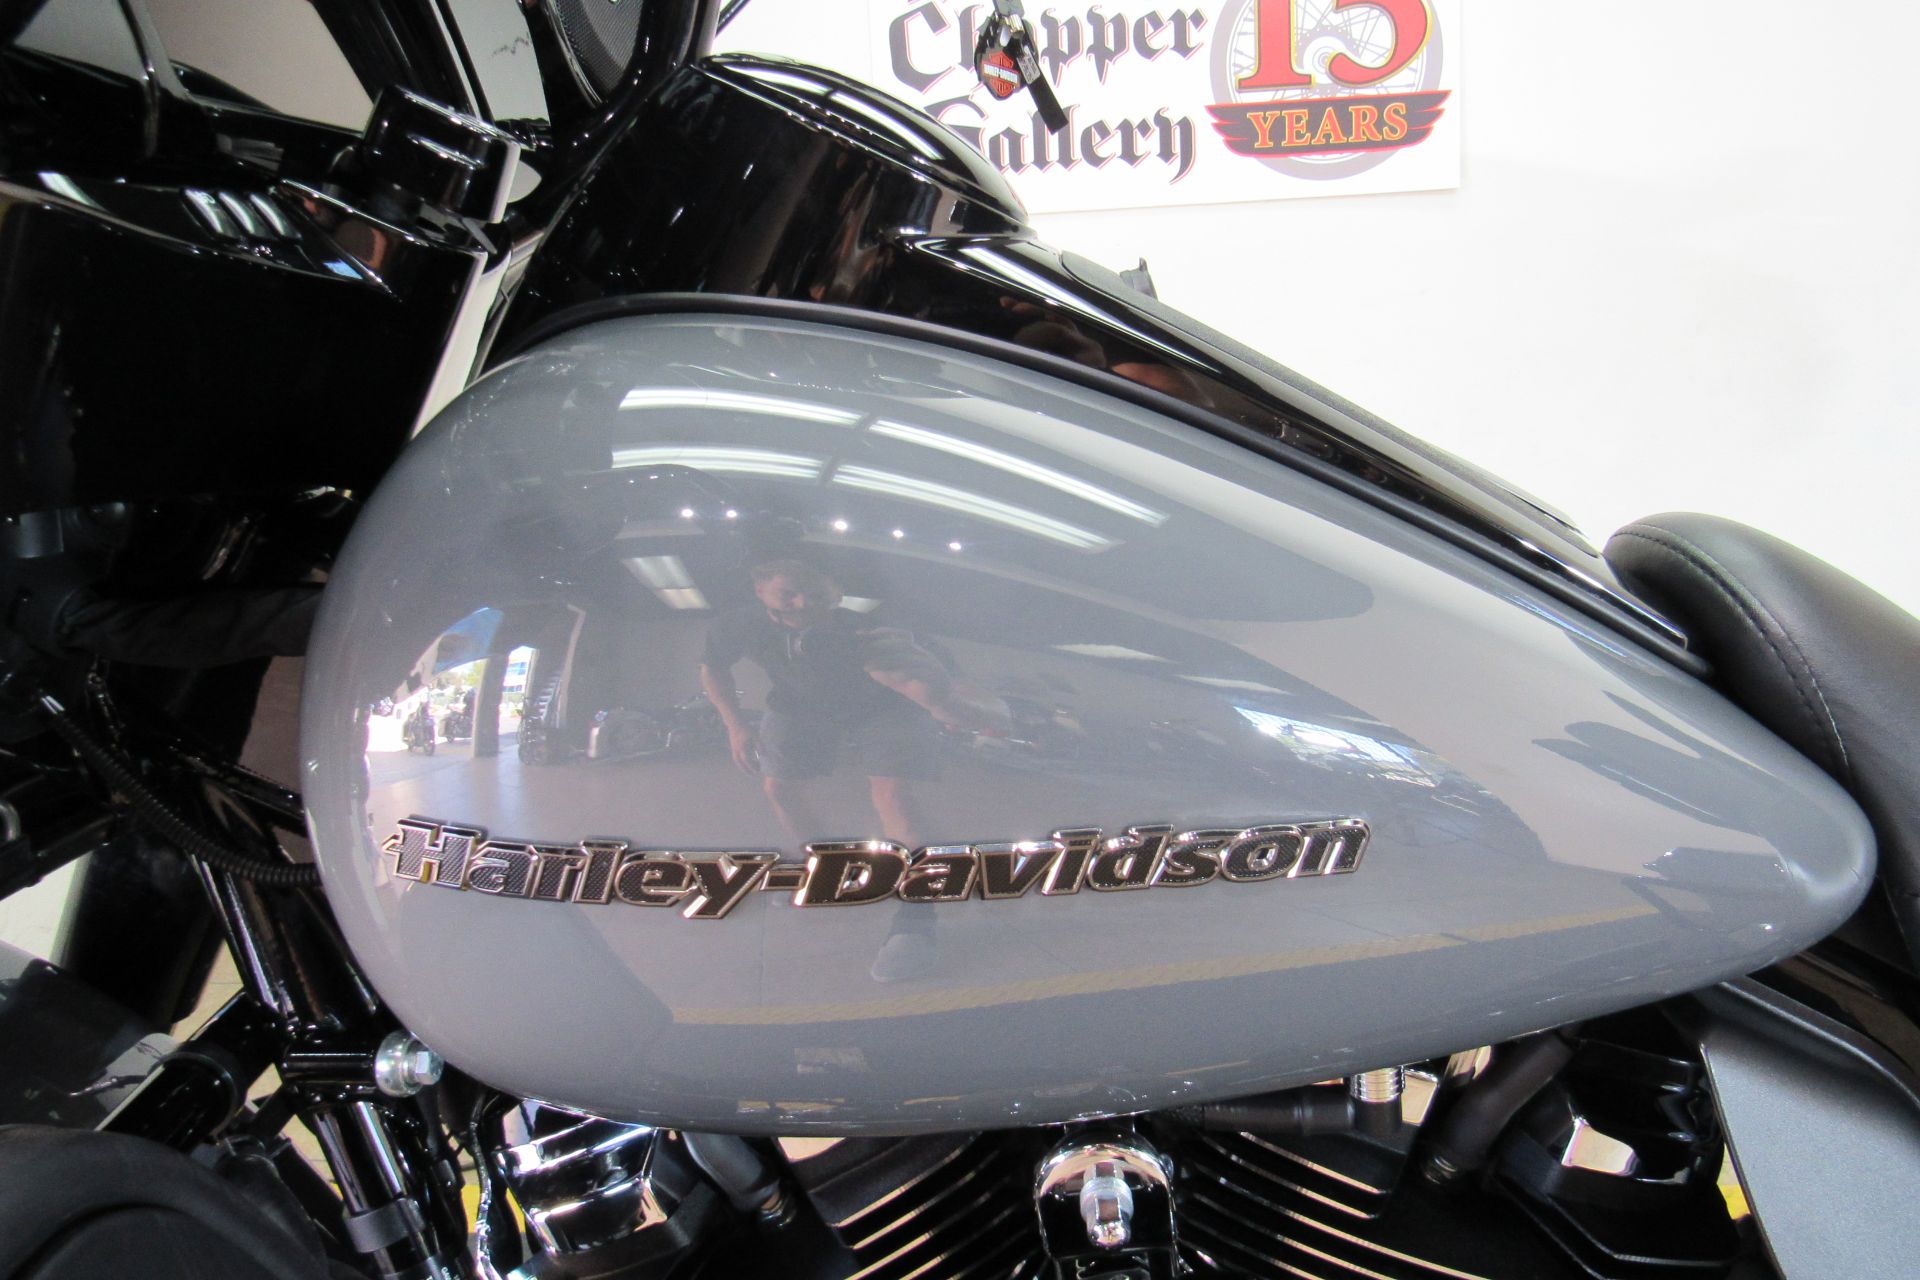 2022 Harley-Davidson Ultra Limited in Temecula, California - Photo 10